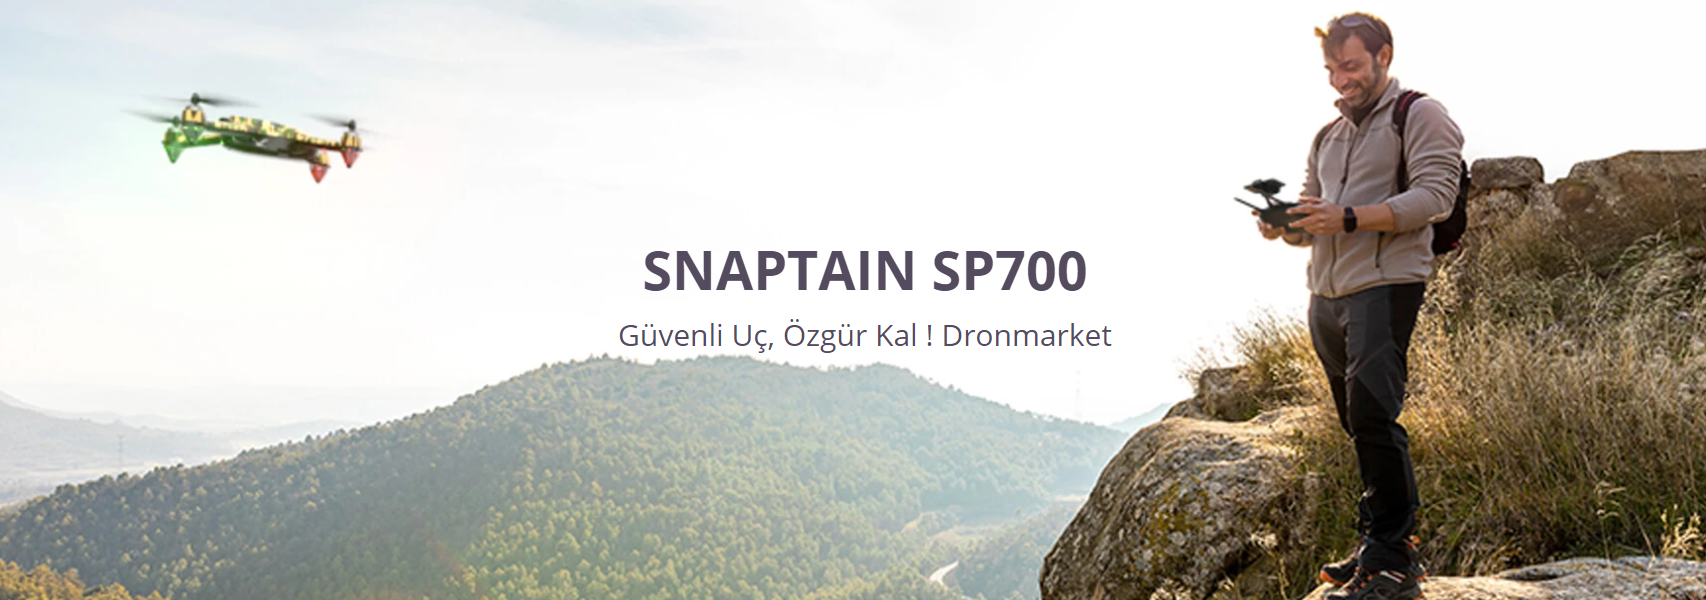 snaptain-sp700-camera-drone-dronmarket